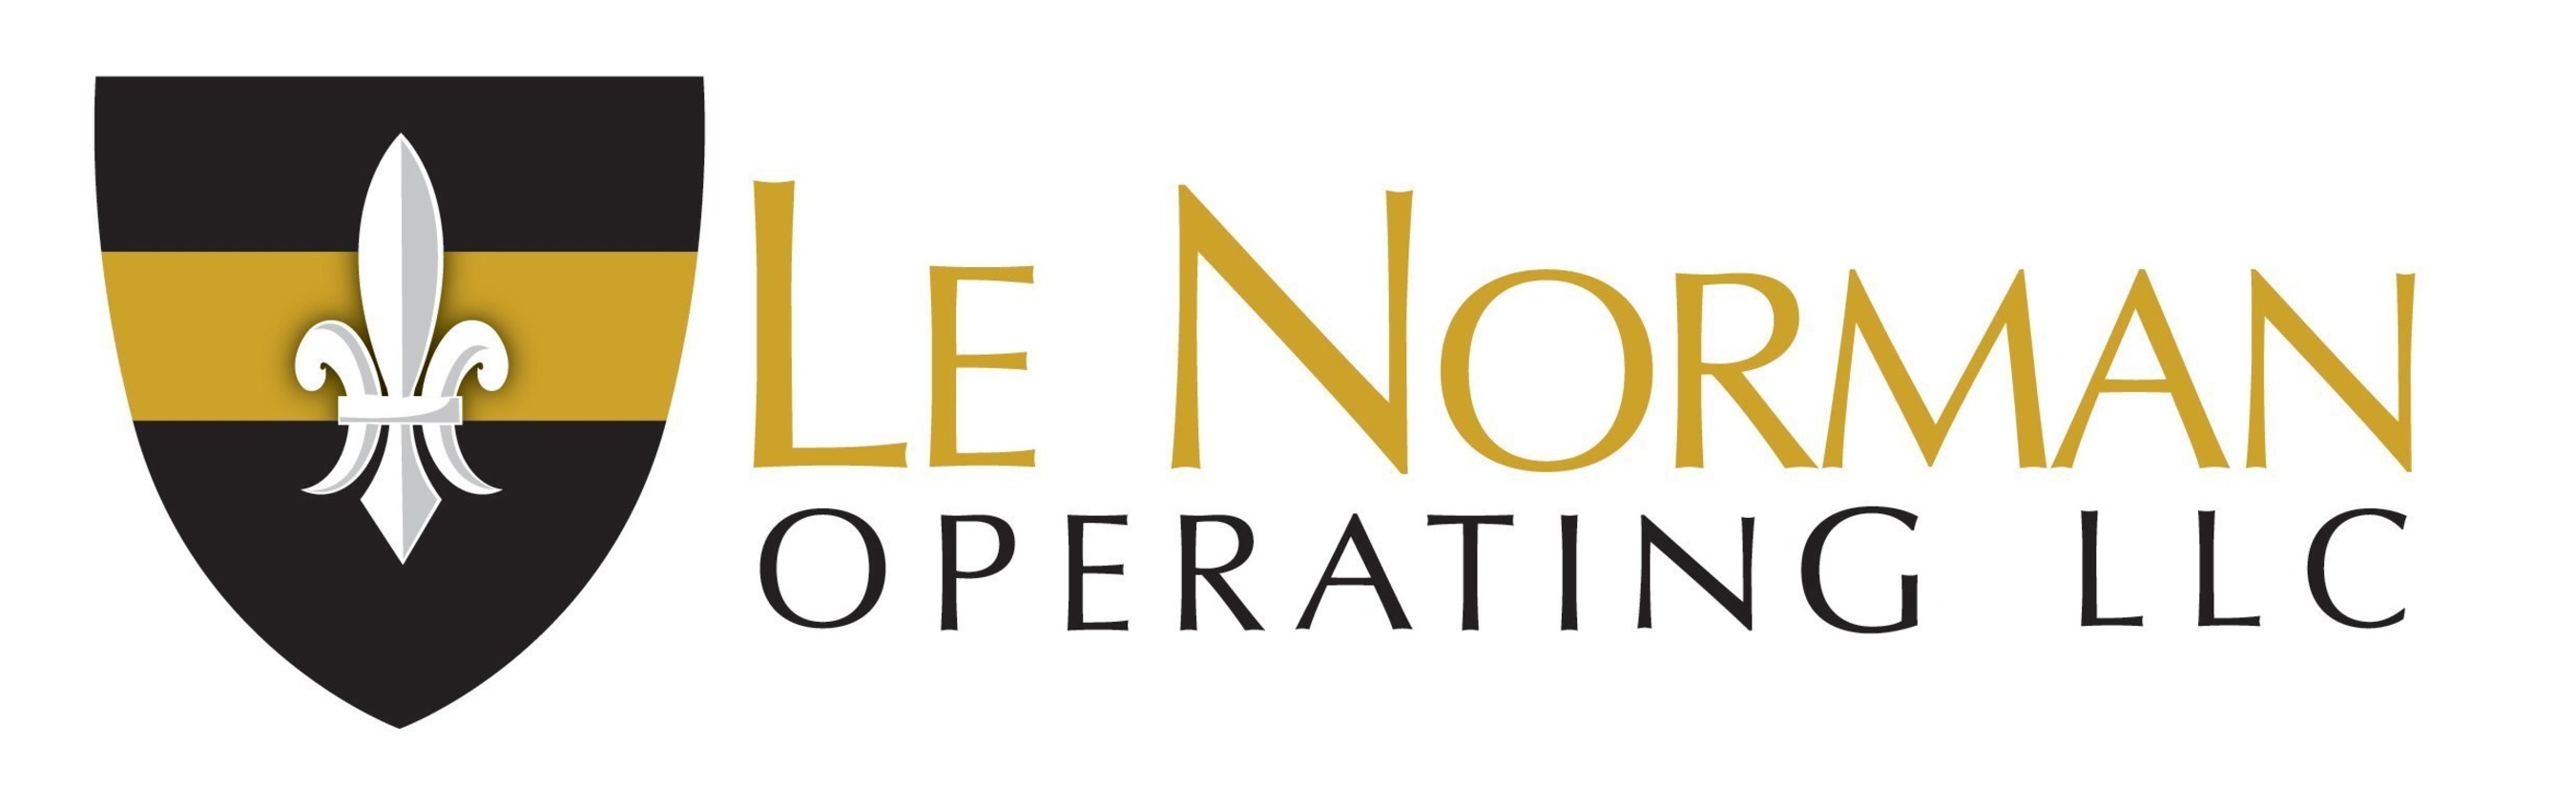 LE NORMAN OPERATING LLC logo